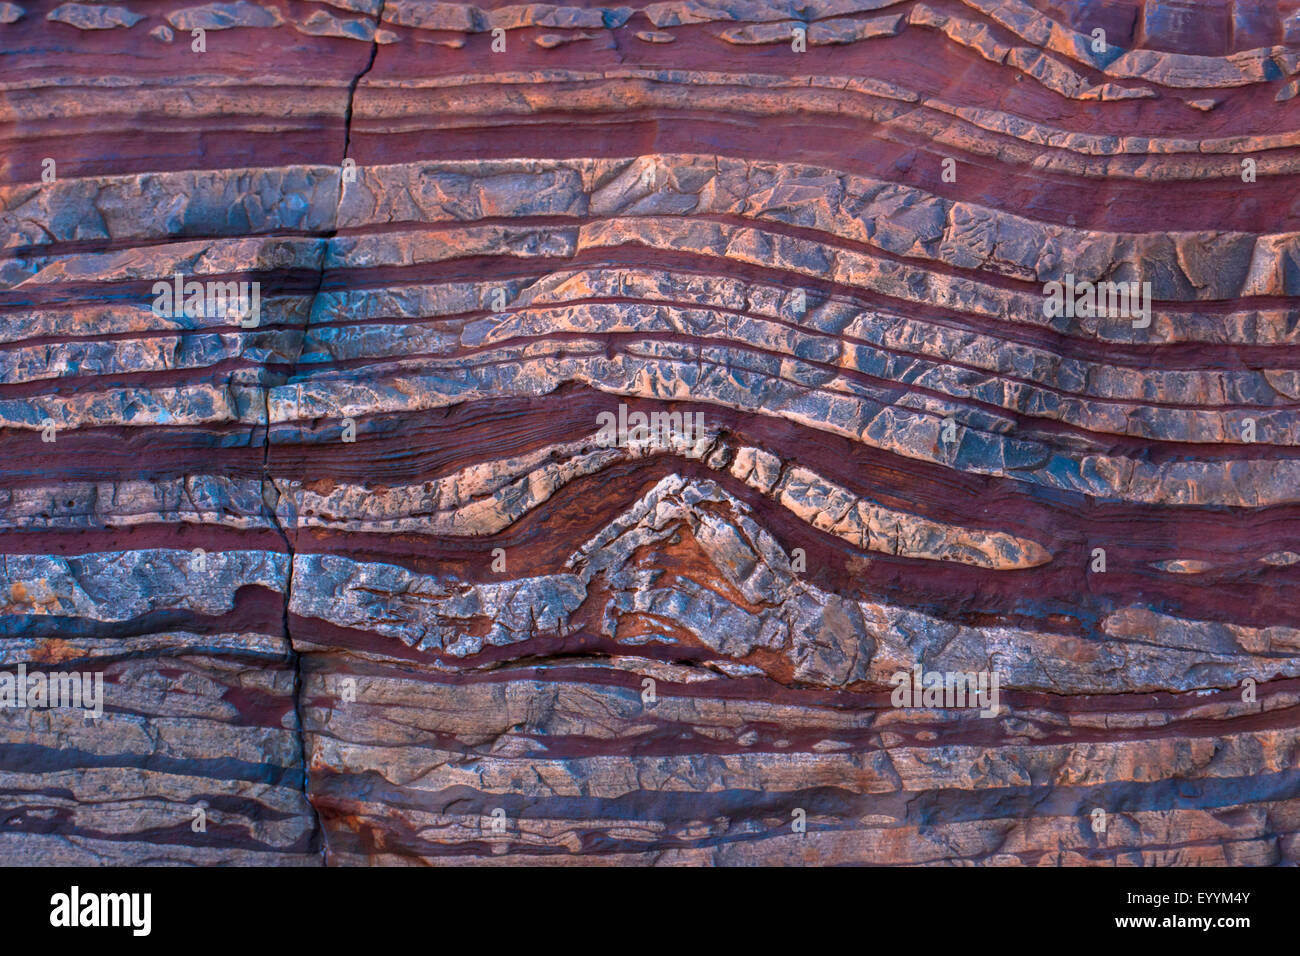 Capas de mineral de hierro, Australia, Australia Occidental, el Parque Nacional Karijini Foto de stock